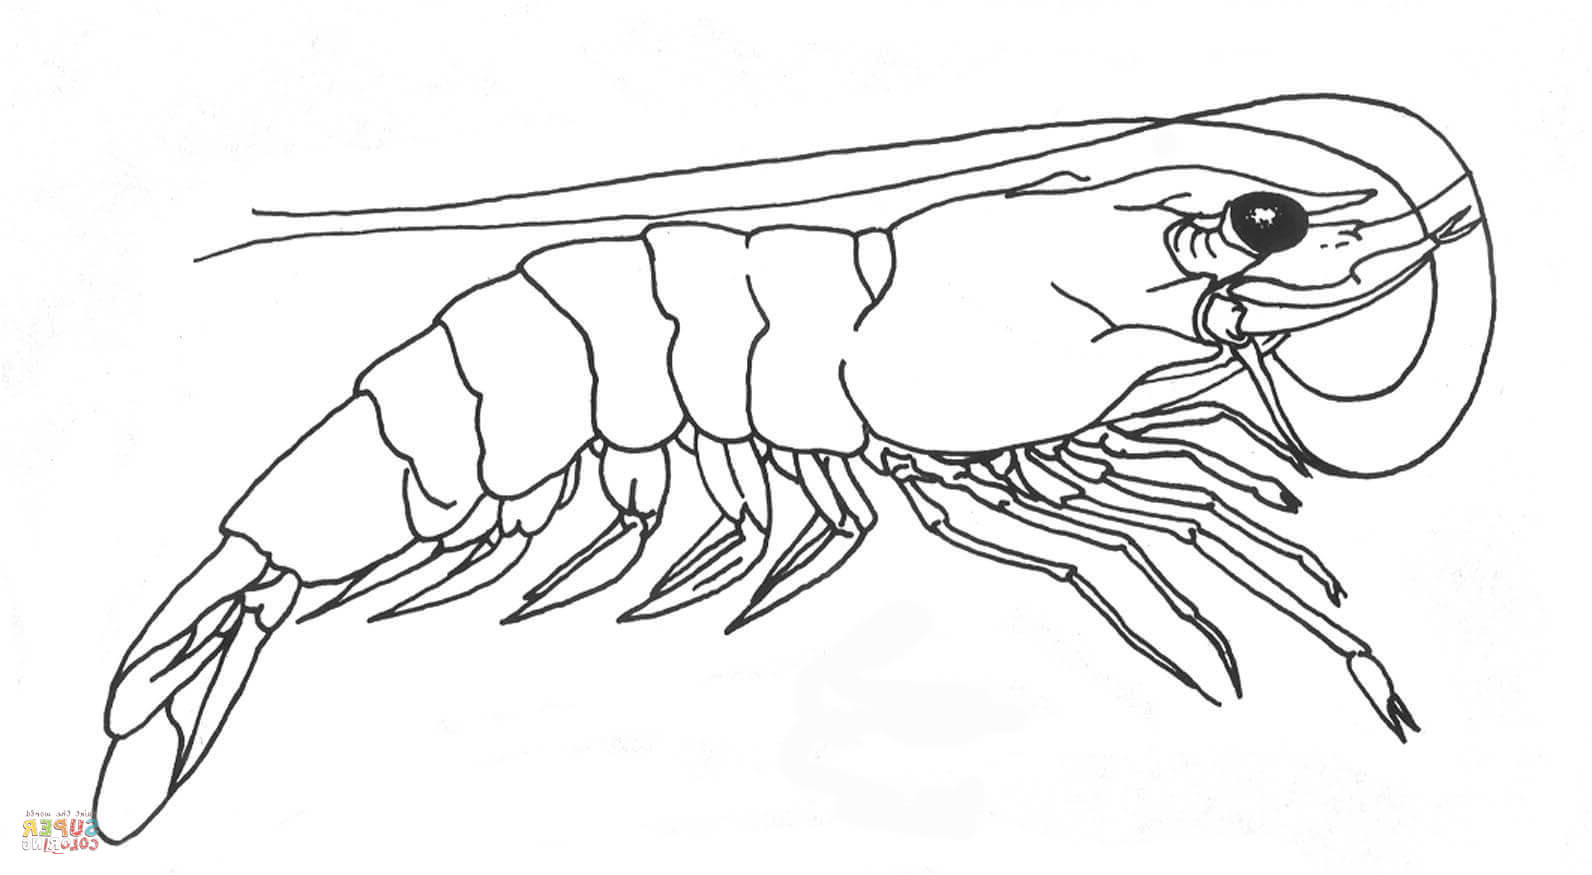 mantis shrimp drawing